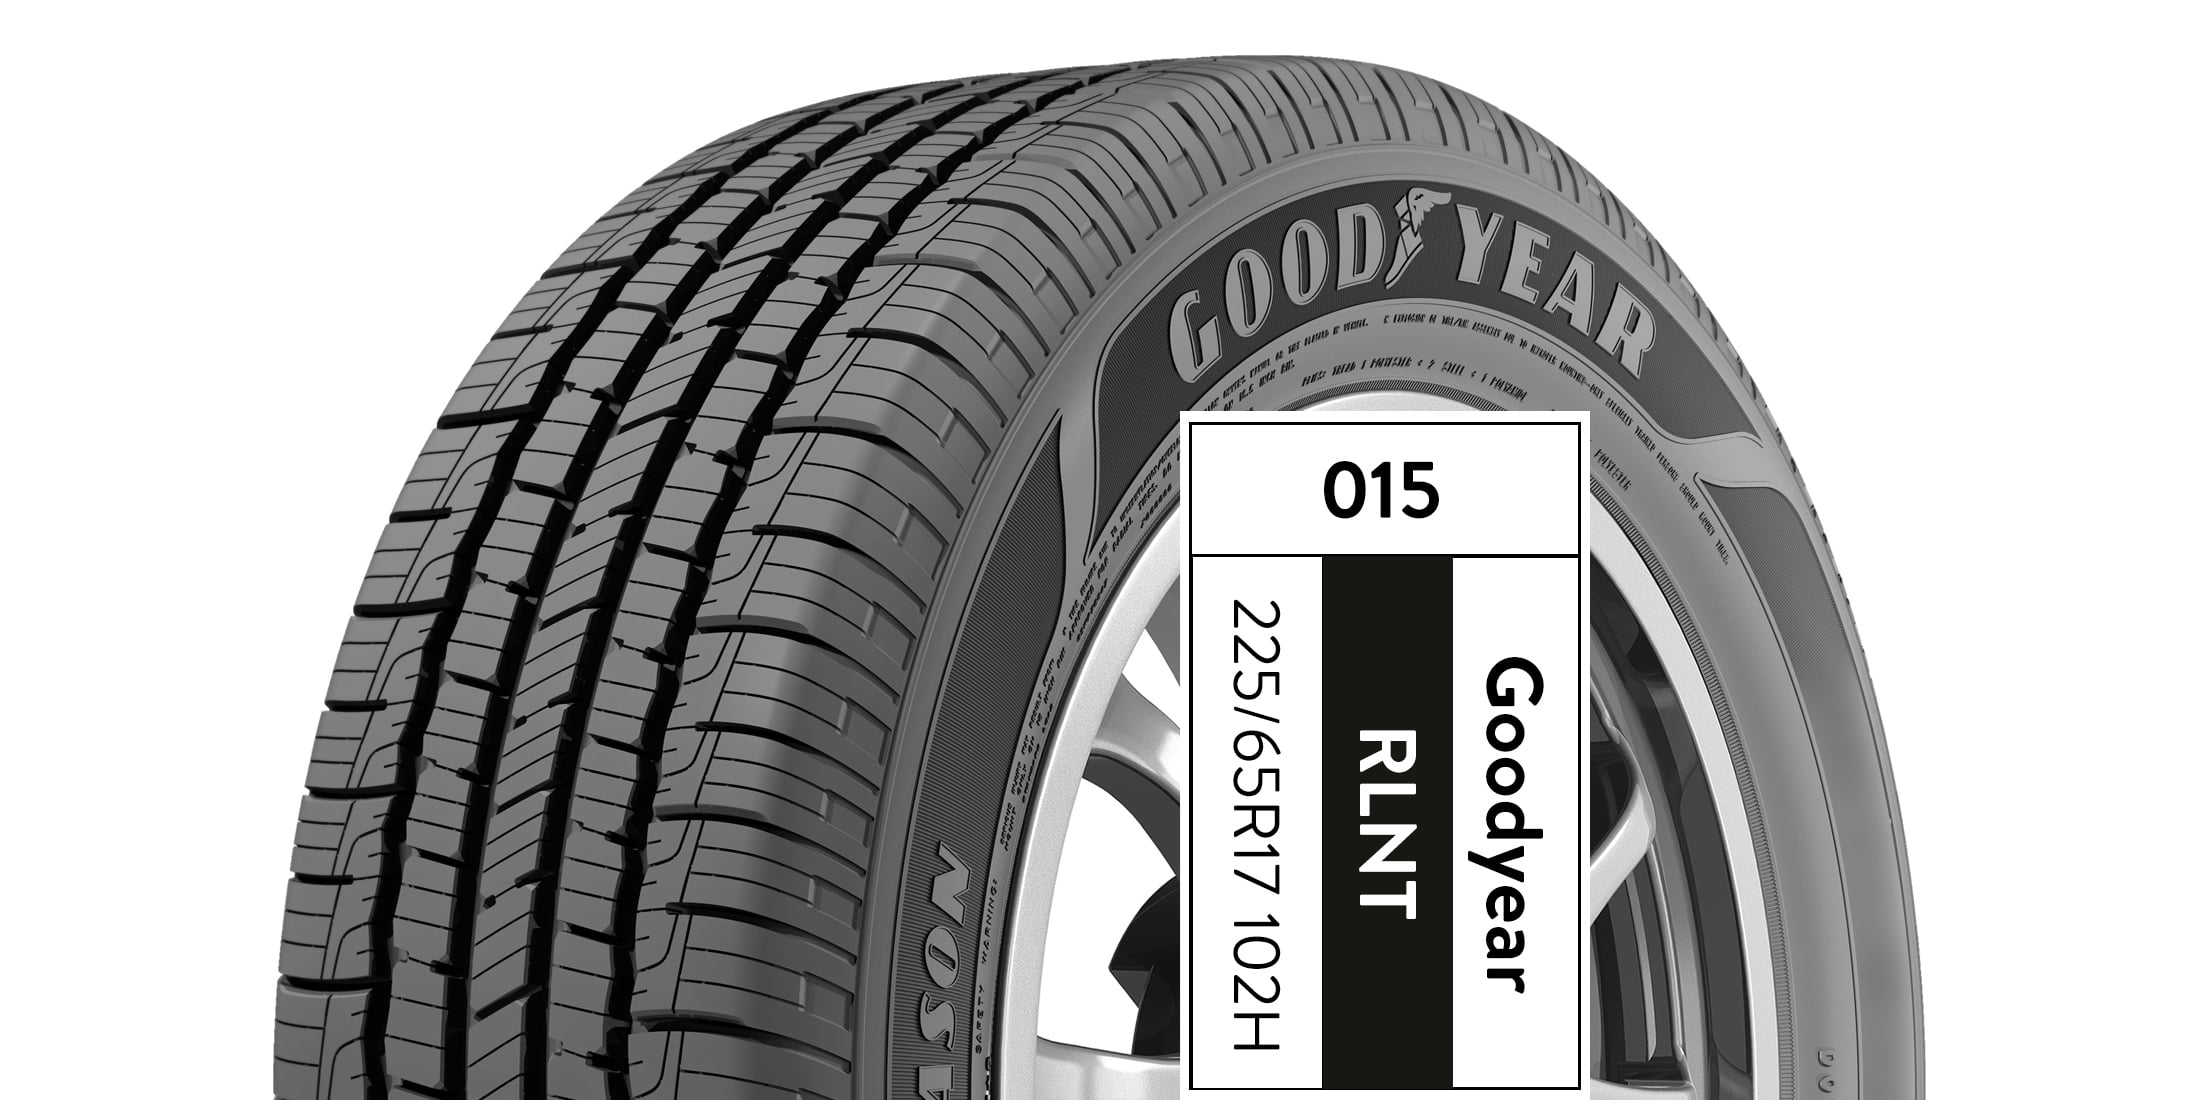 Buy Vanderbilt Grand Spirit Touring L/X P235/55R17 Tires